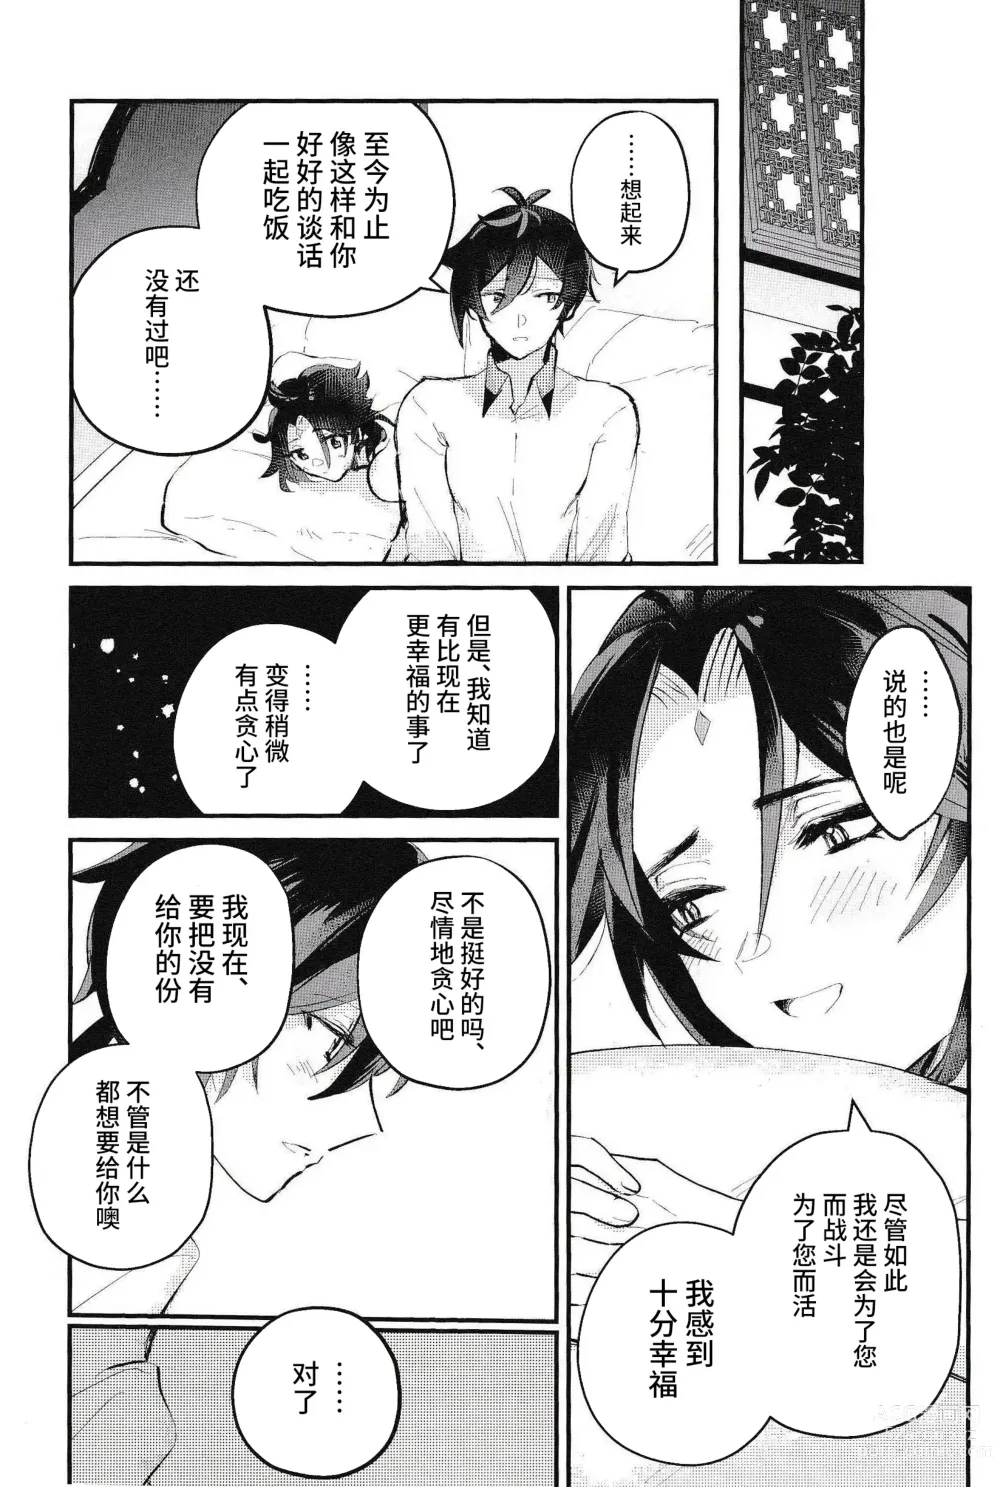 Page 23 of doujinshi Setsugetsuka Tomo ni - share a snow, moon, and flowers